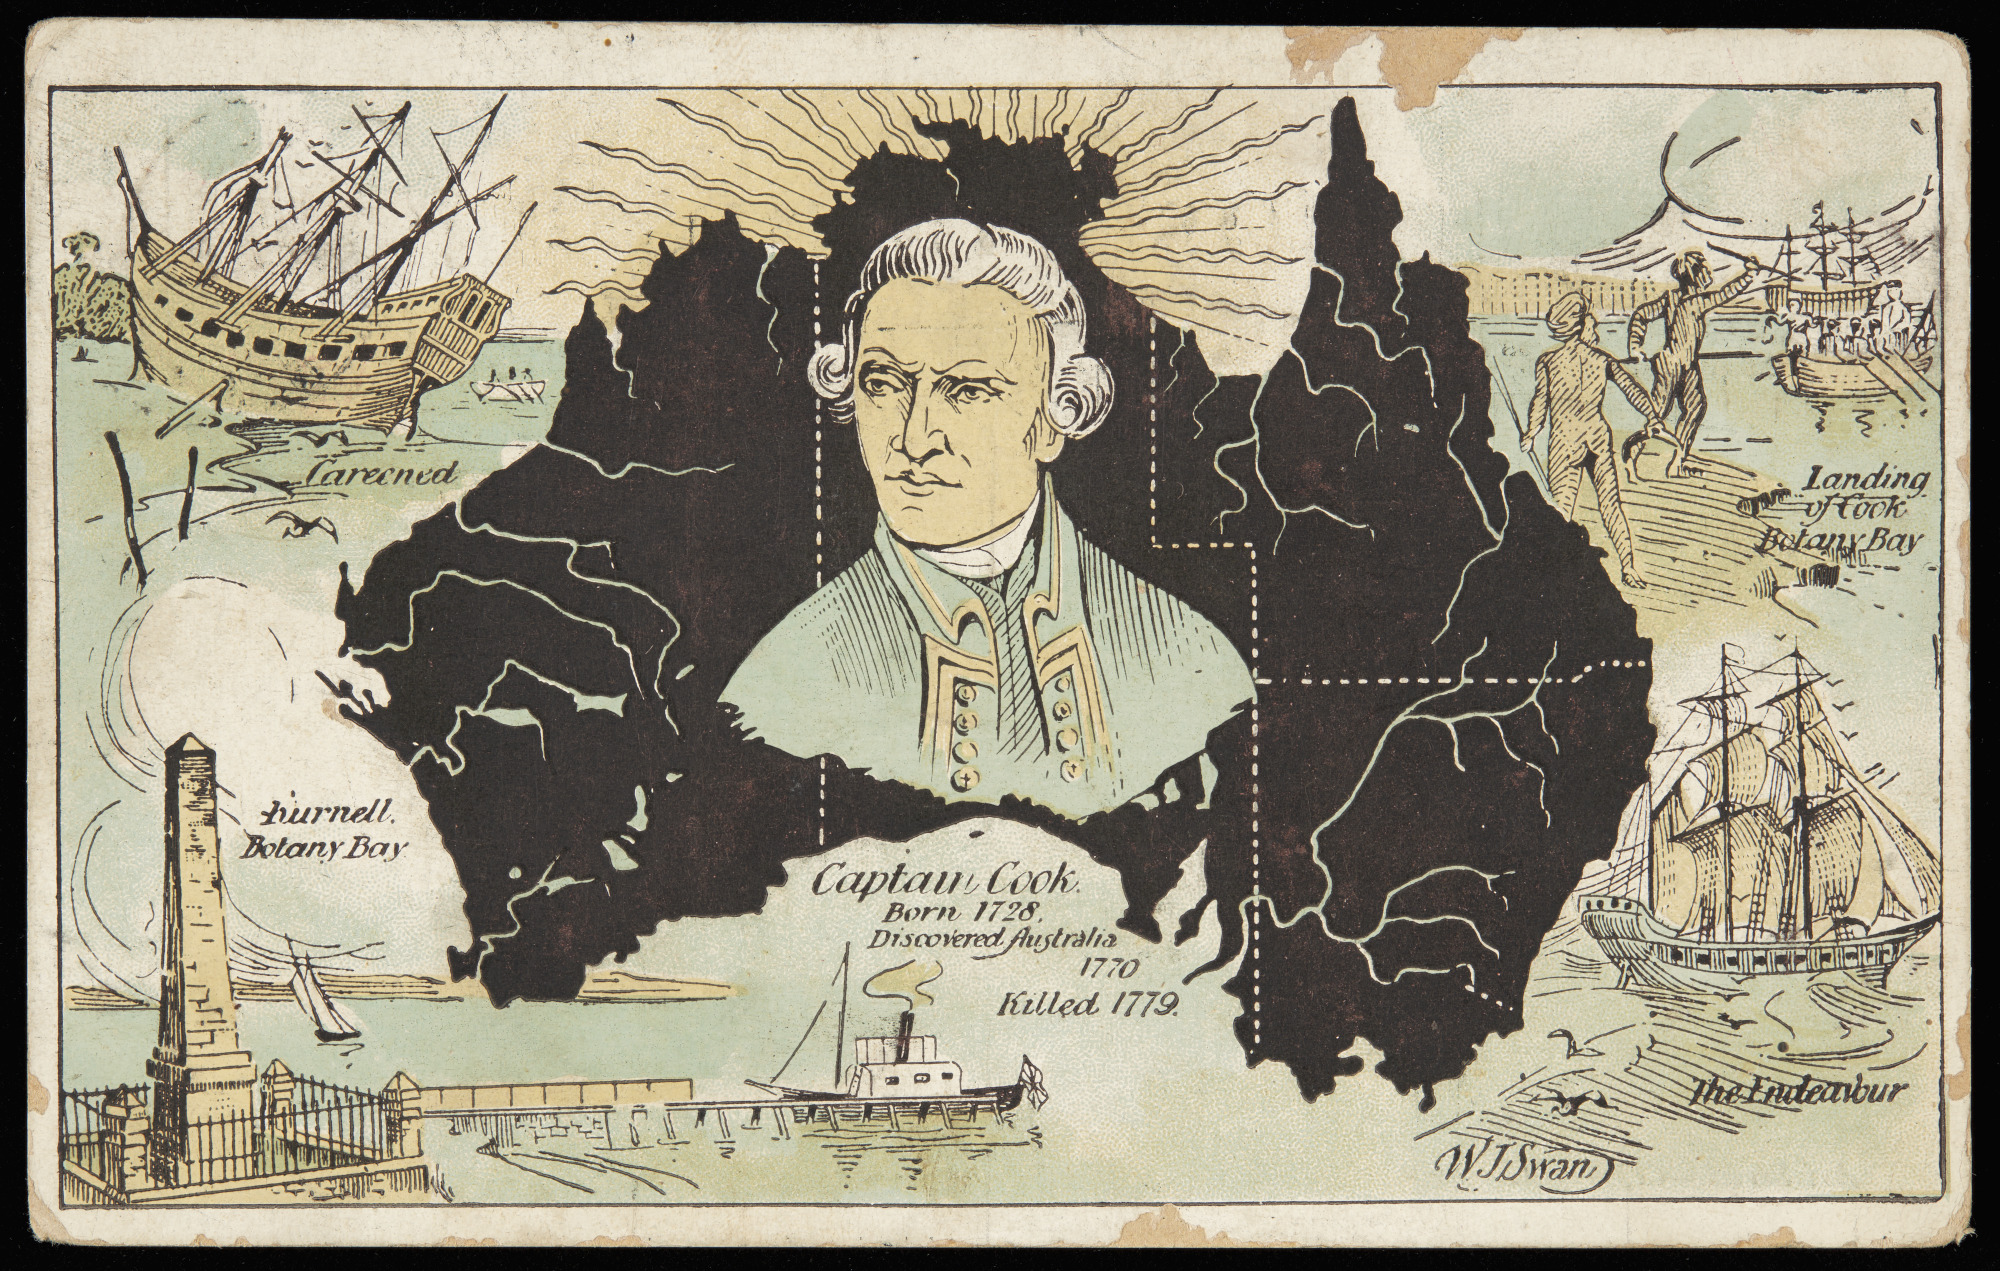 Postcard titled ‘Captain Cook, born 1728, discovered Australia 1770, killed 1779’.